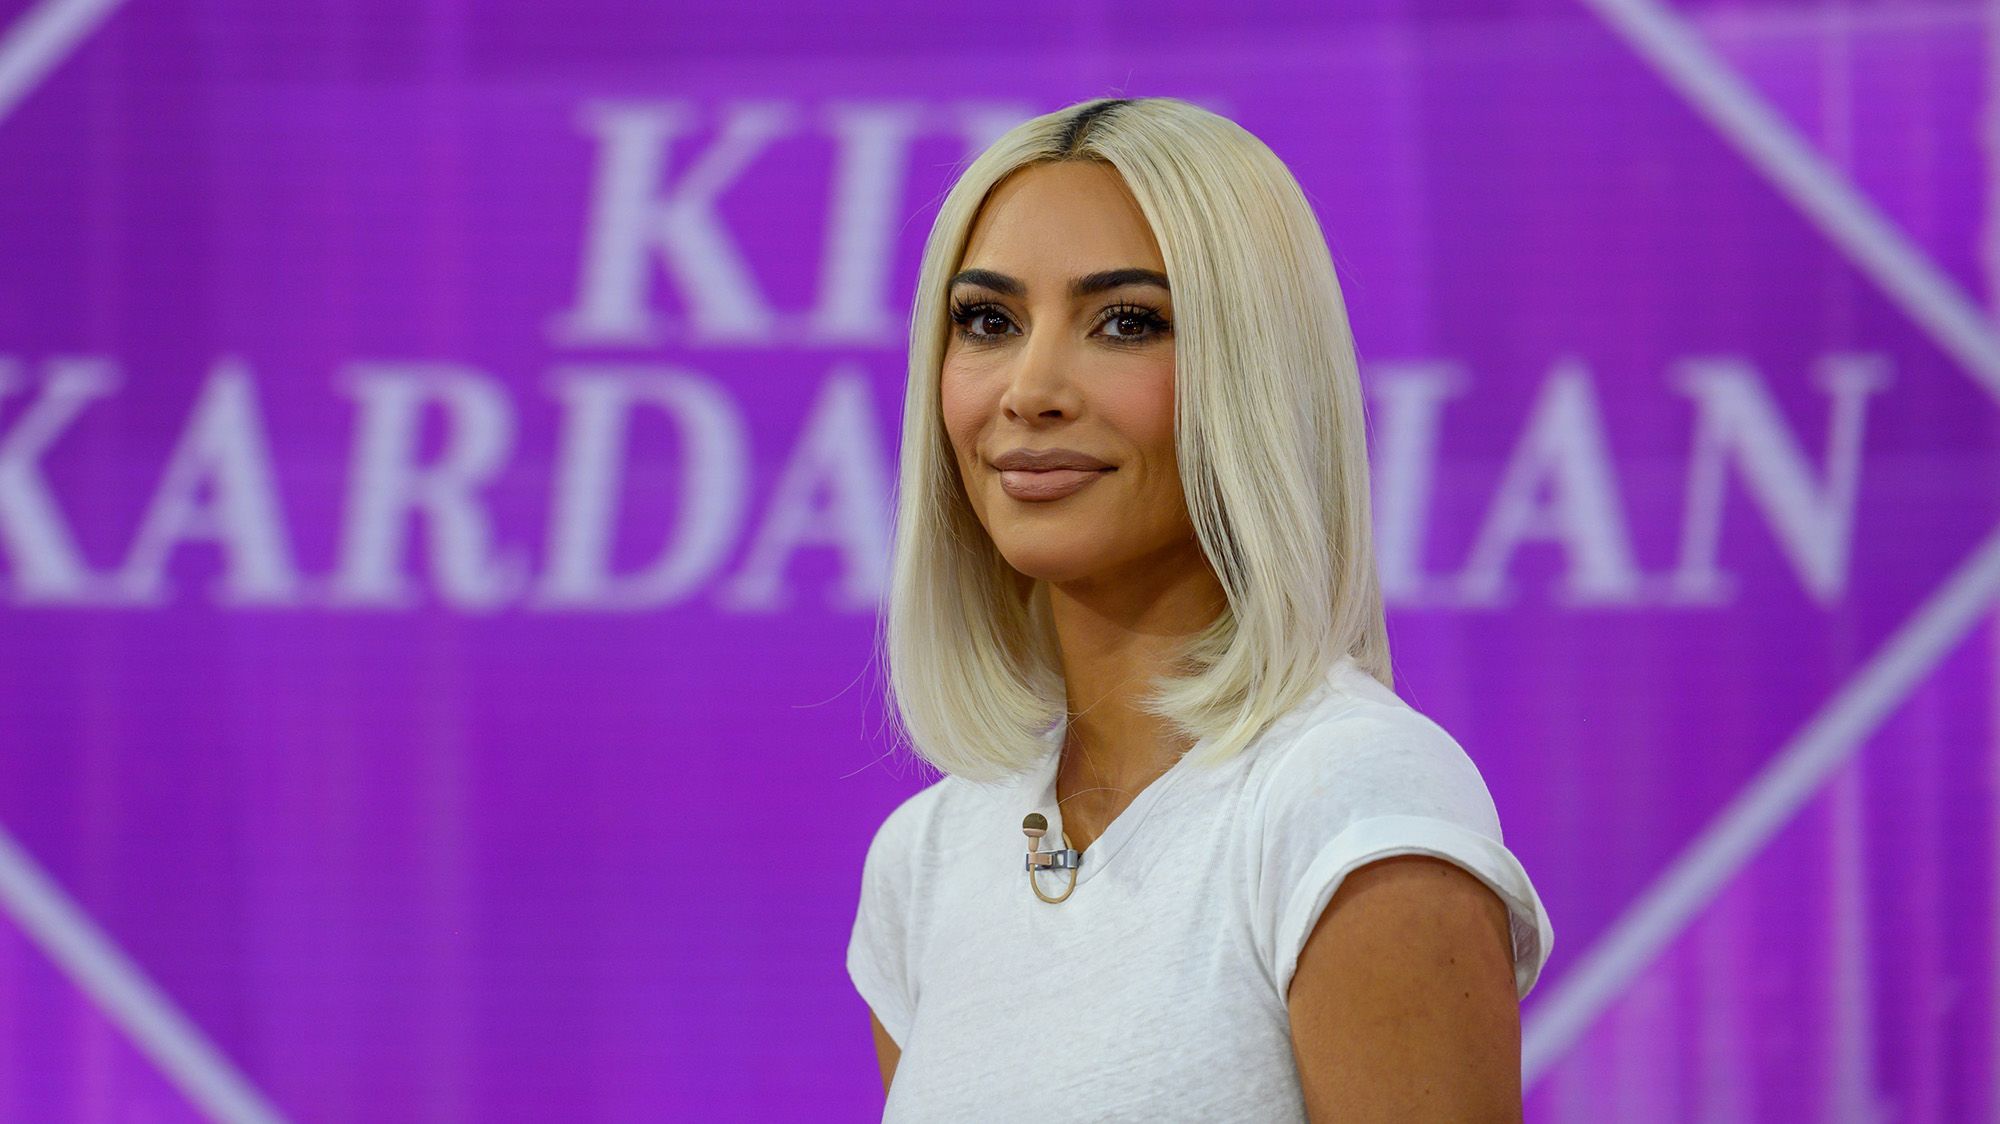 The Kardashians Still Aren't Disclosing Paid Ads on Instagram